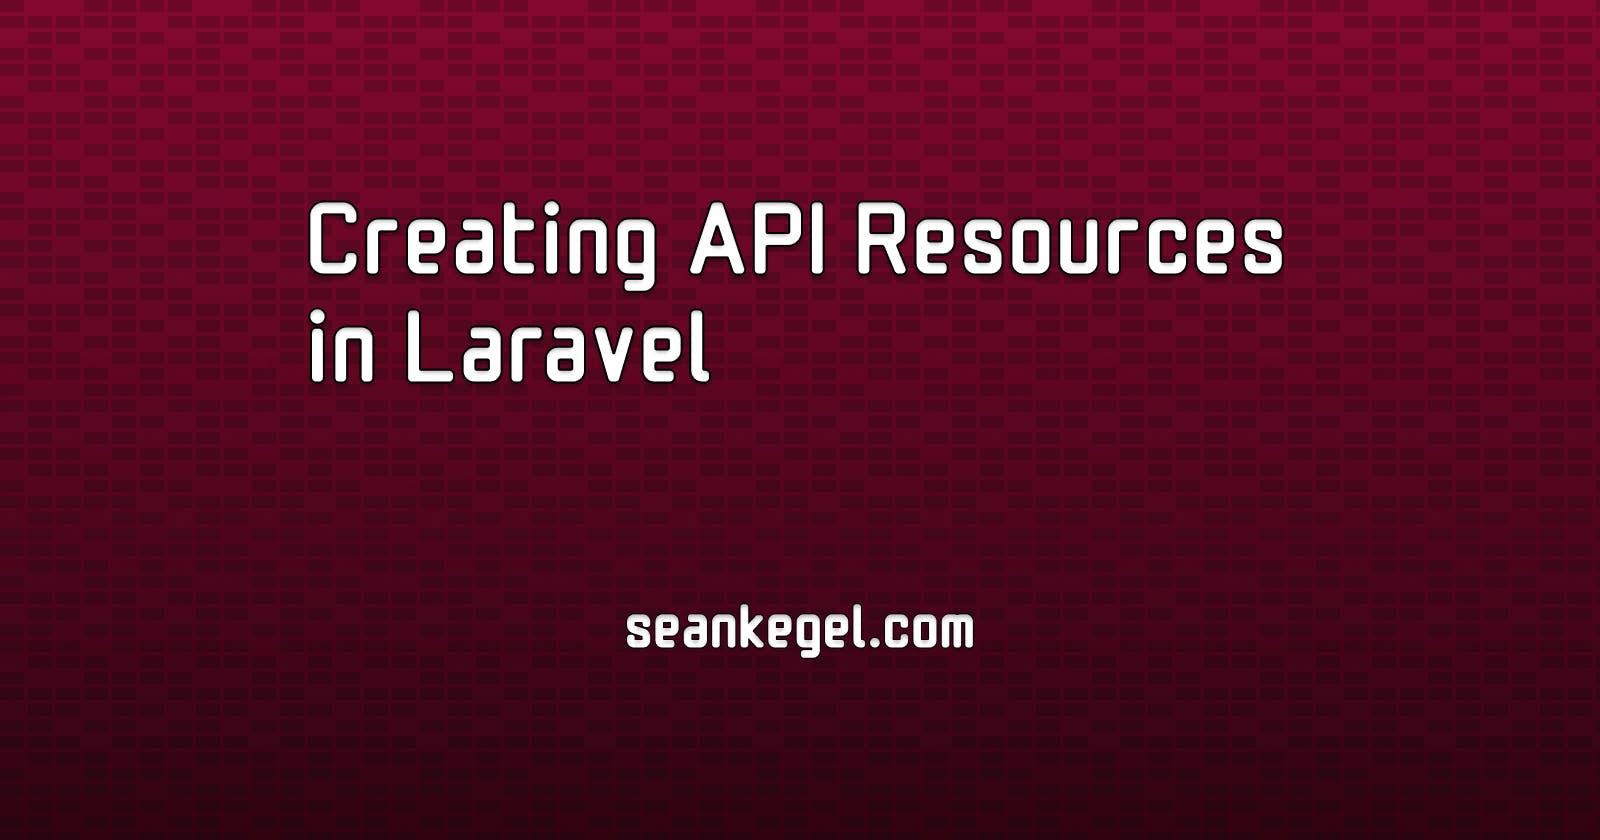 Creating API Resources in Laravel